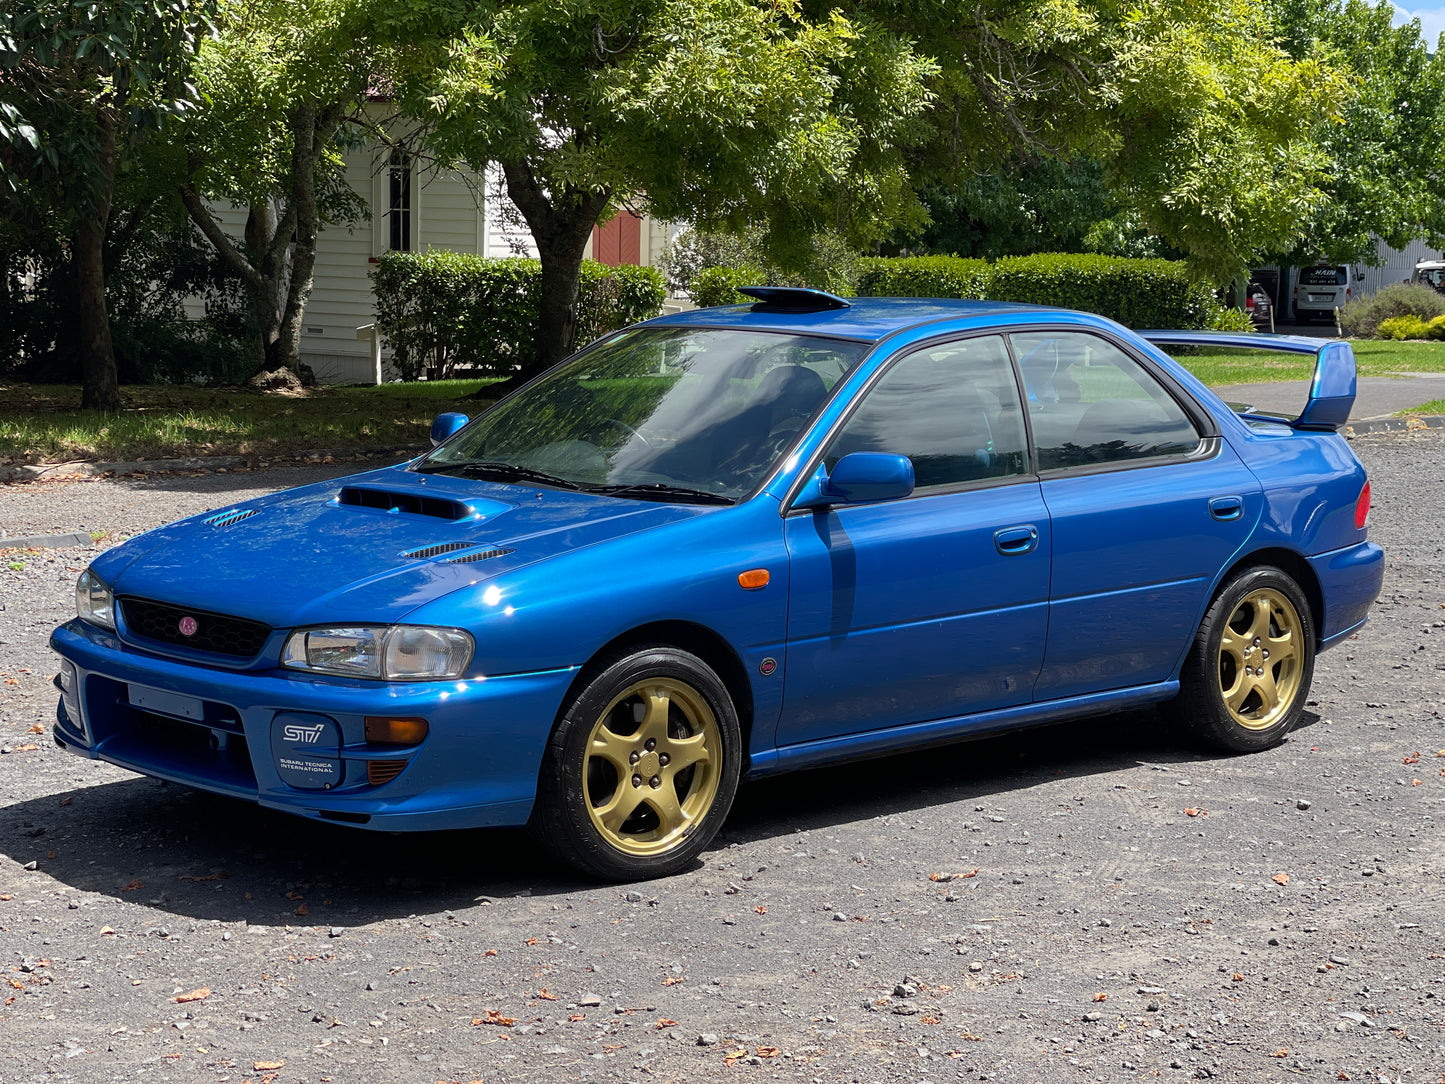 Subaru Impreza WRX STI 1998 - TYPE RA